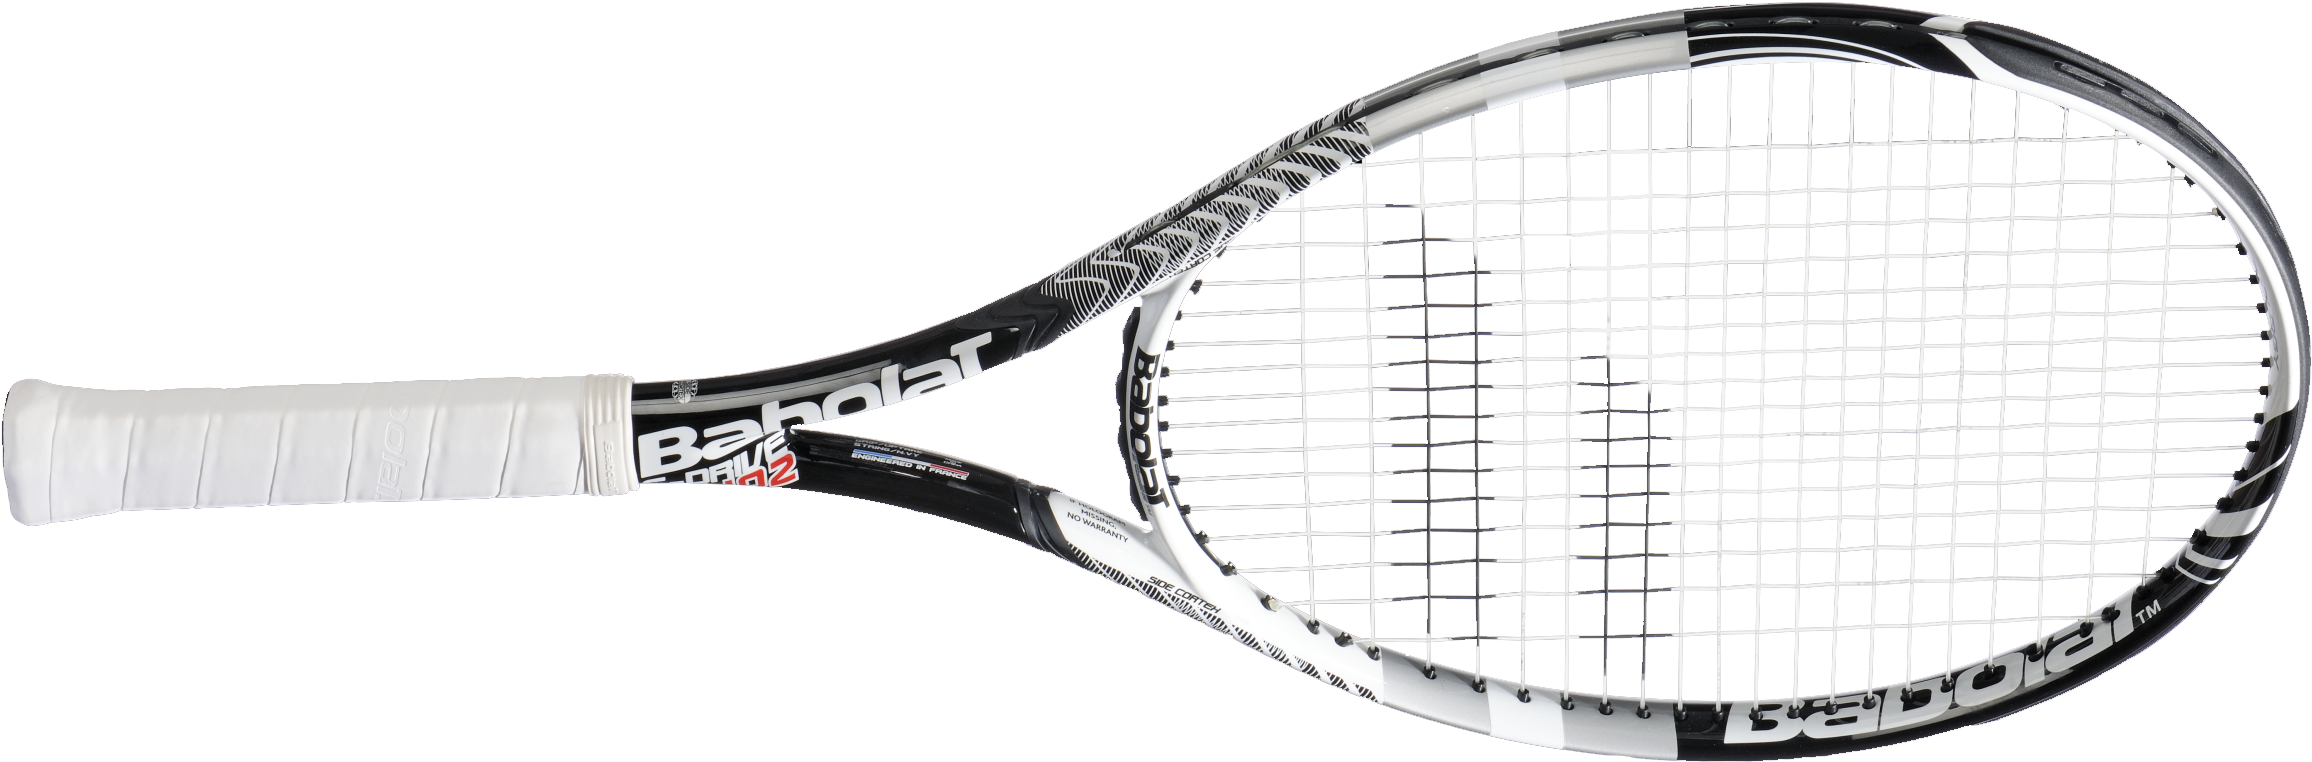 Professional Tennis Racketon Display PNG